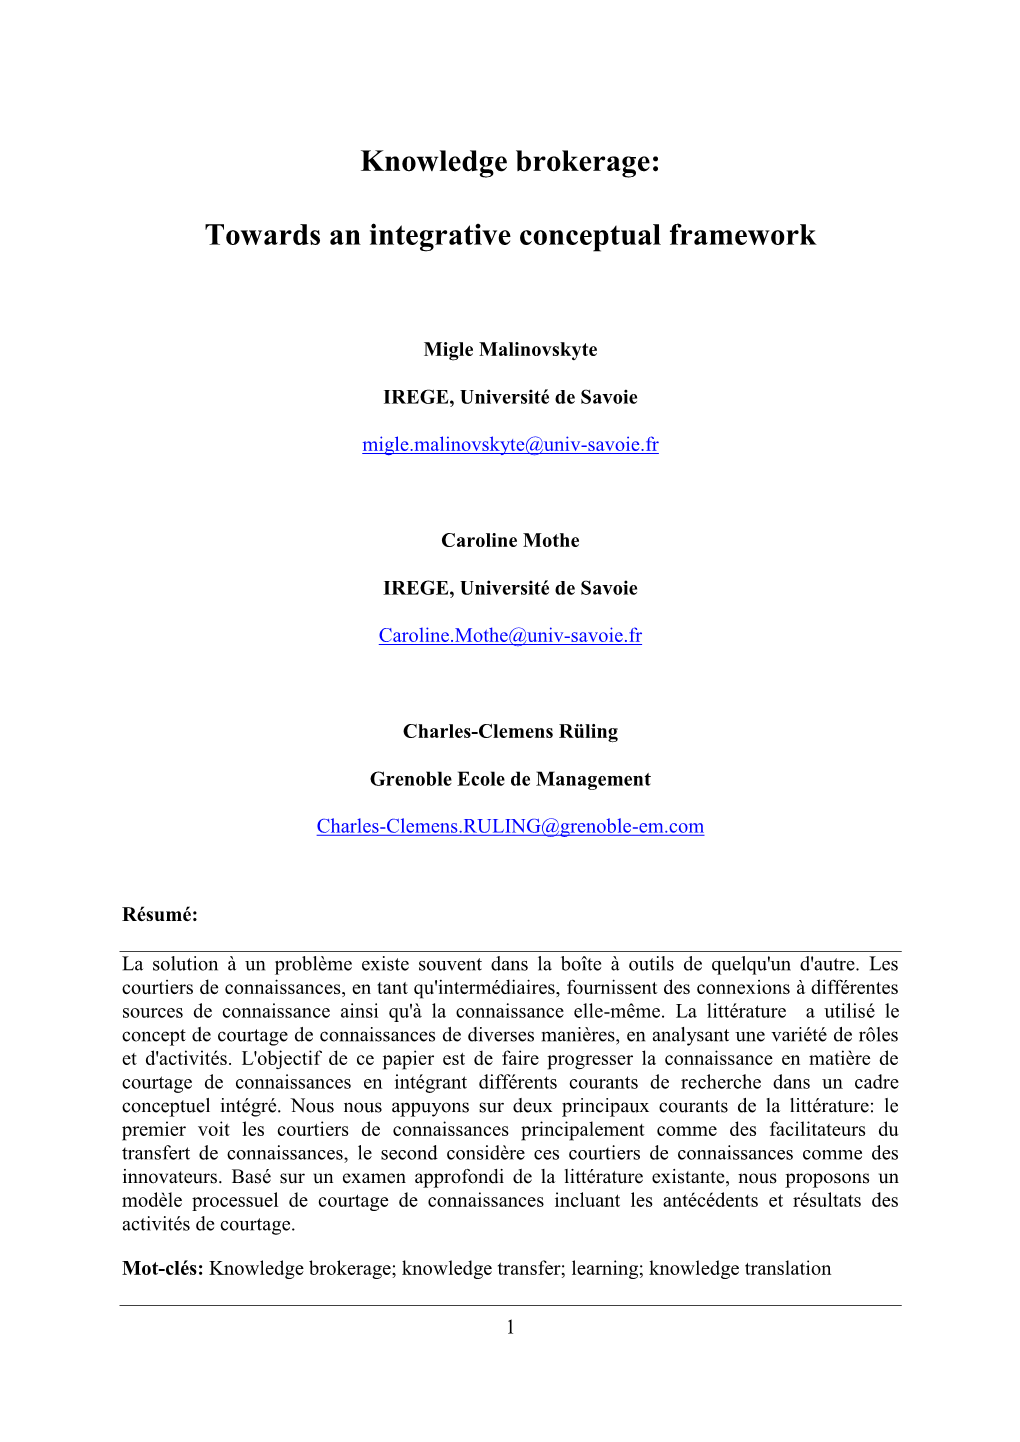 Knowledge Brokerage: Towards an Integrative Conceptual Framework